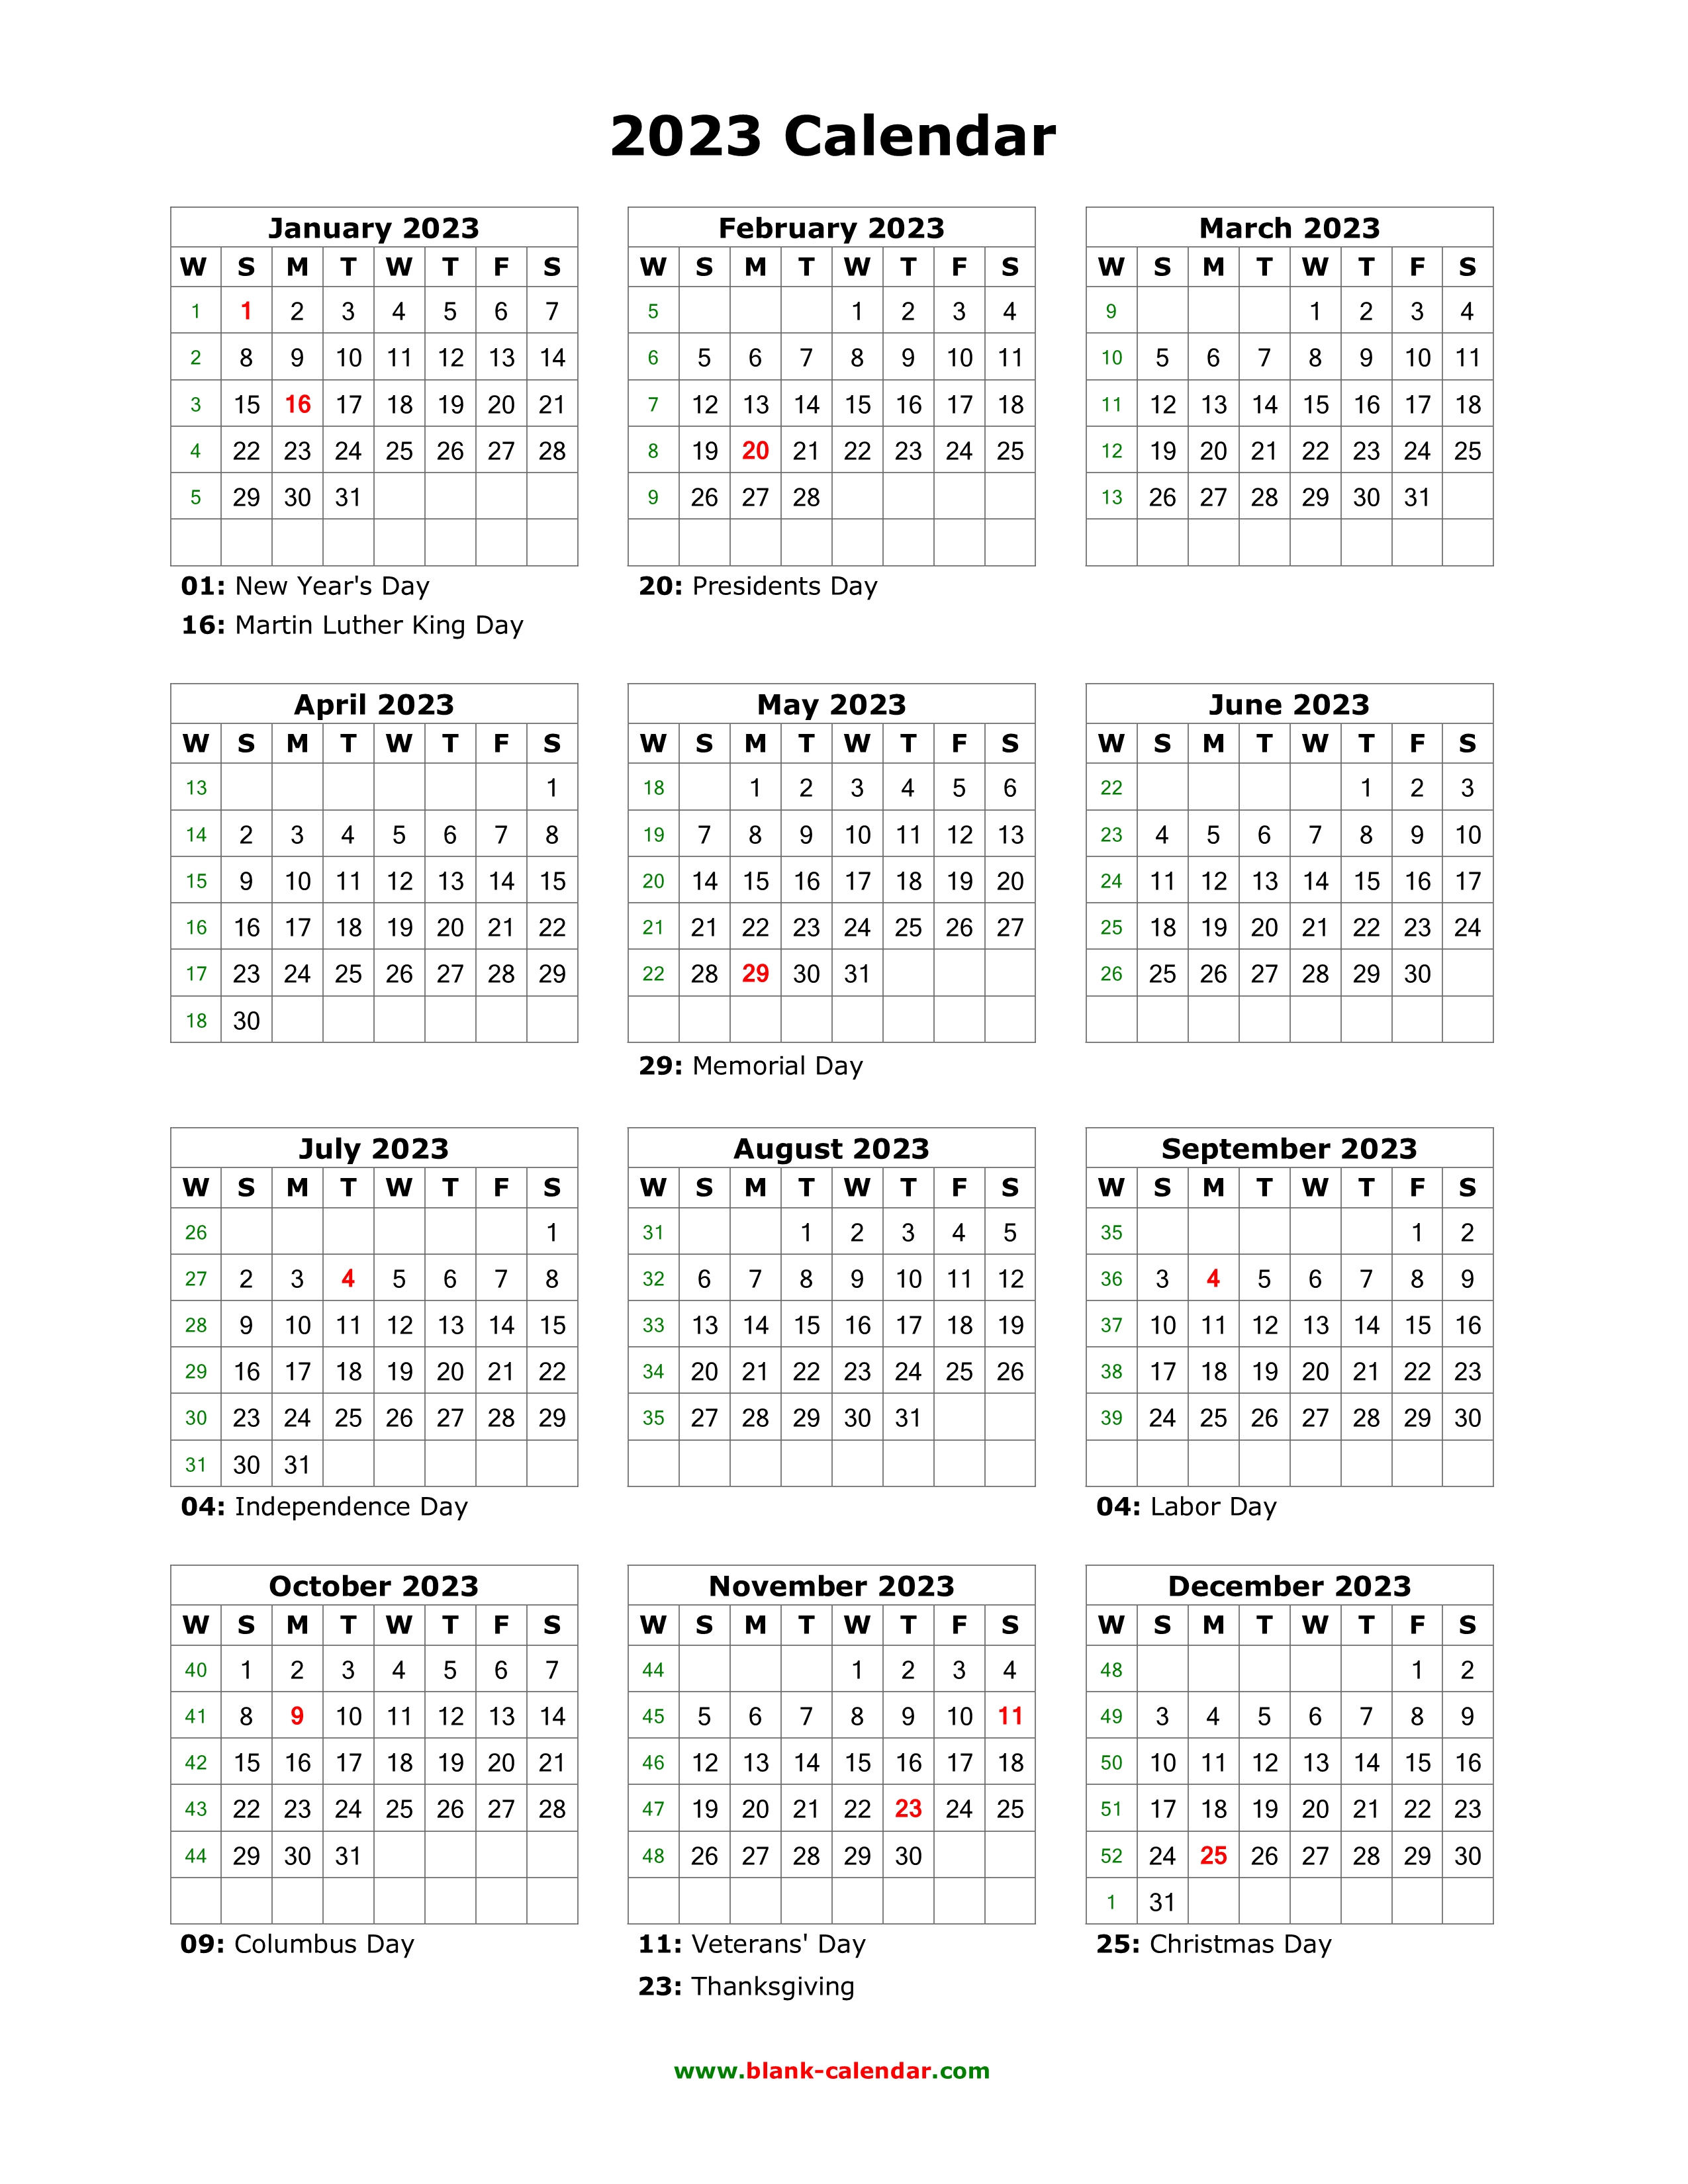 free printable 2023 calendar with holidays shopmall.my